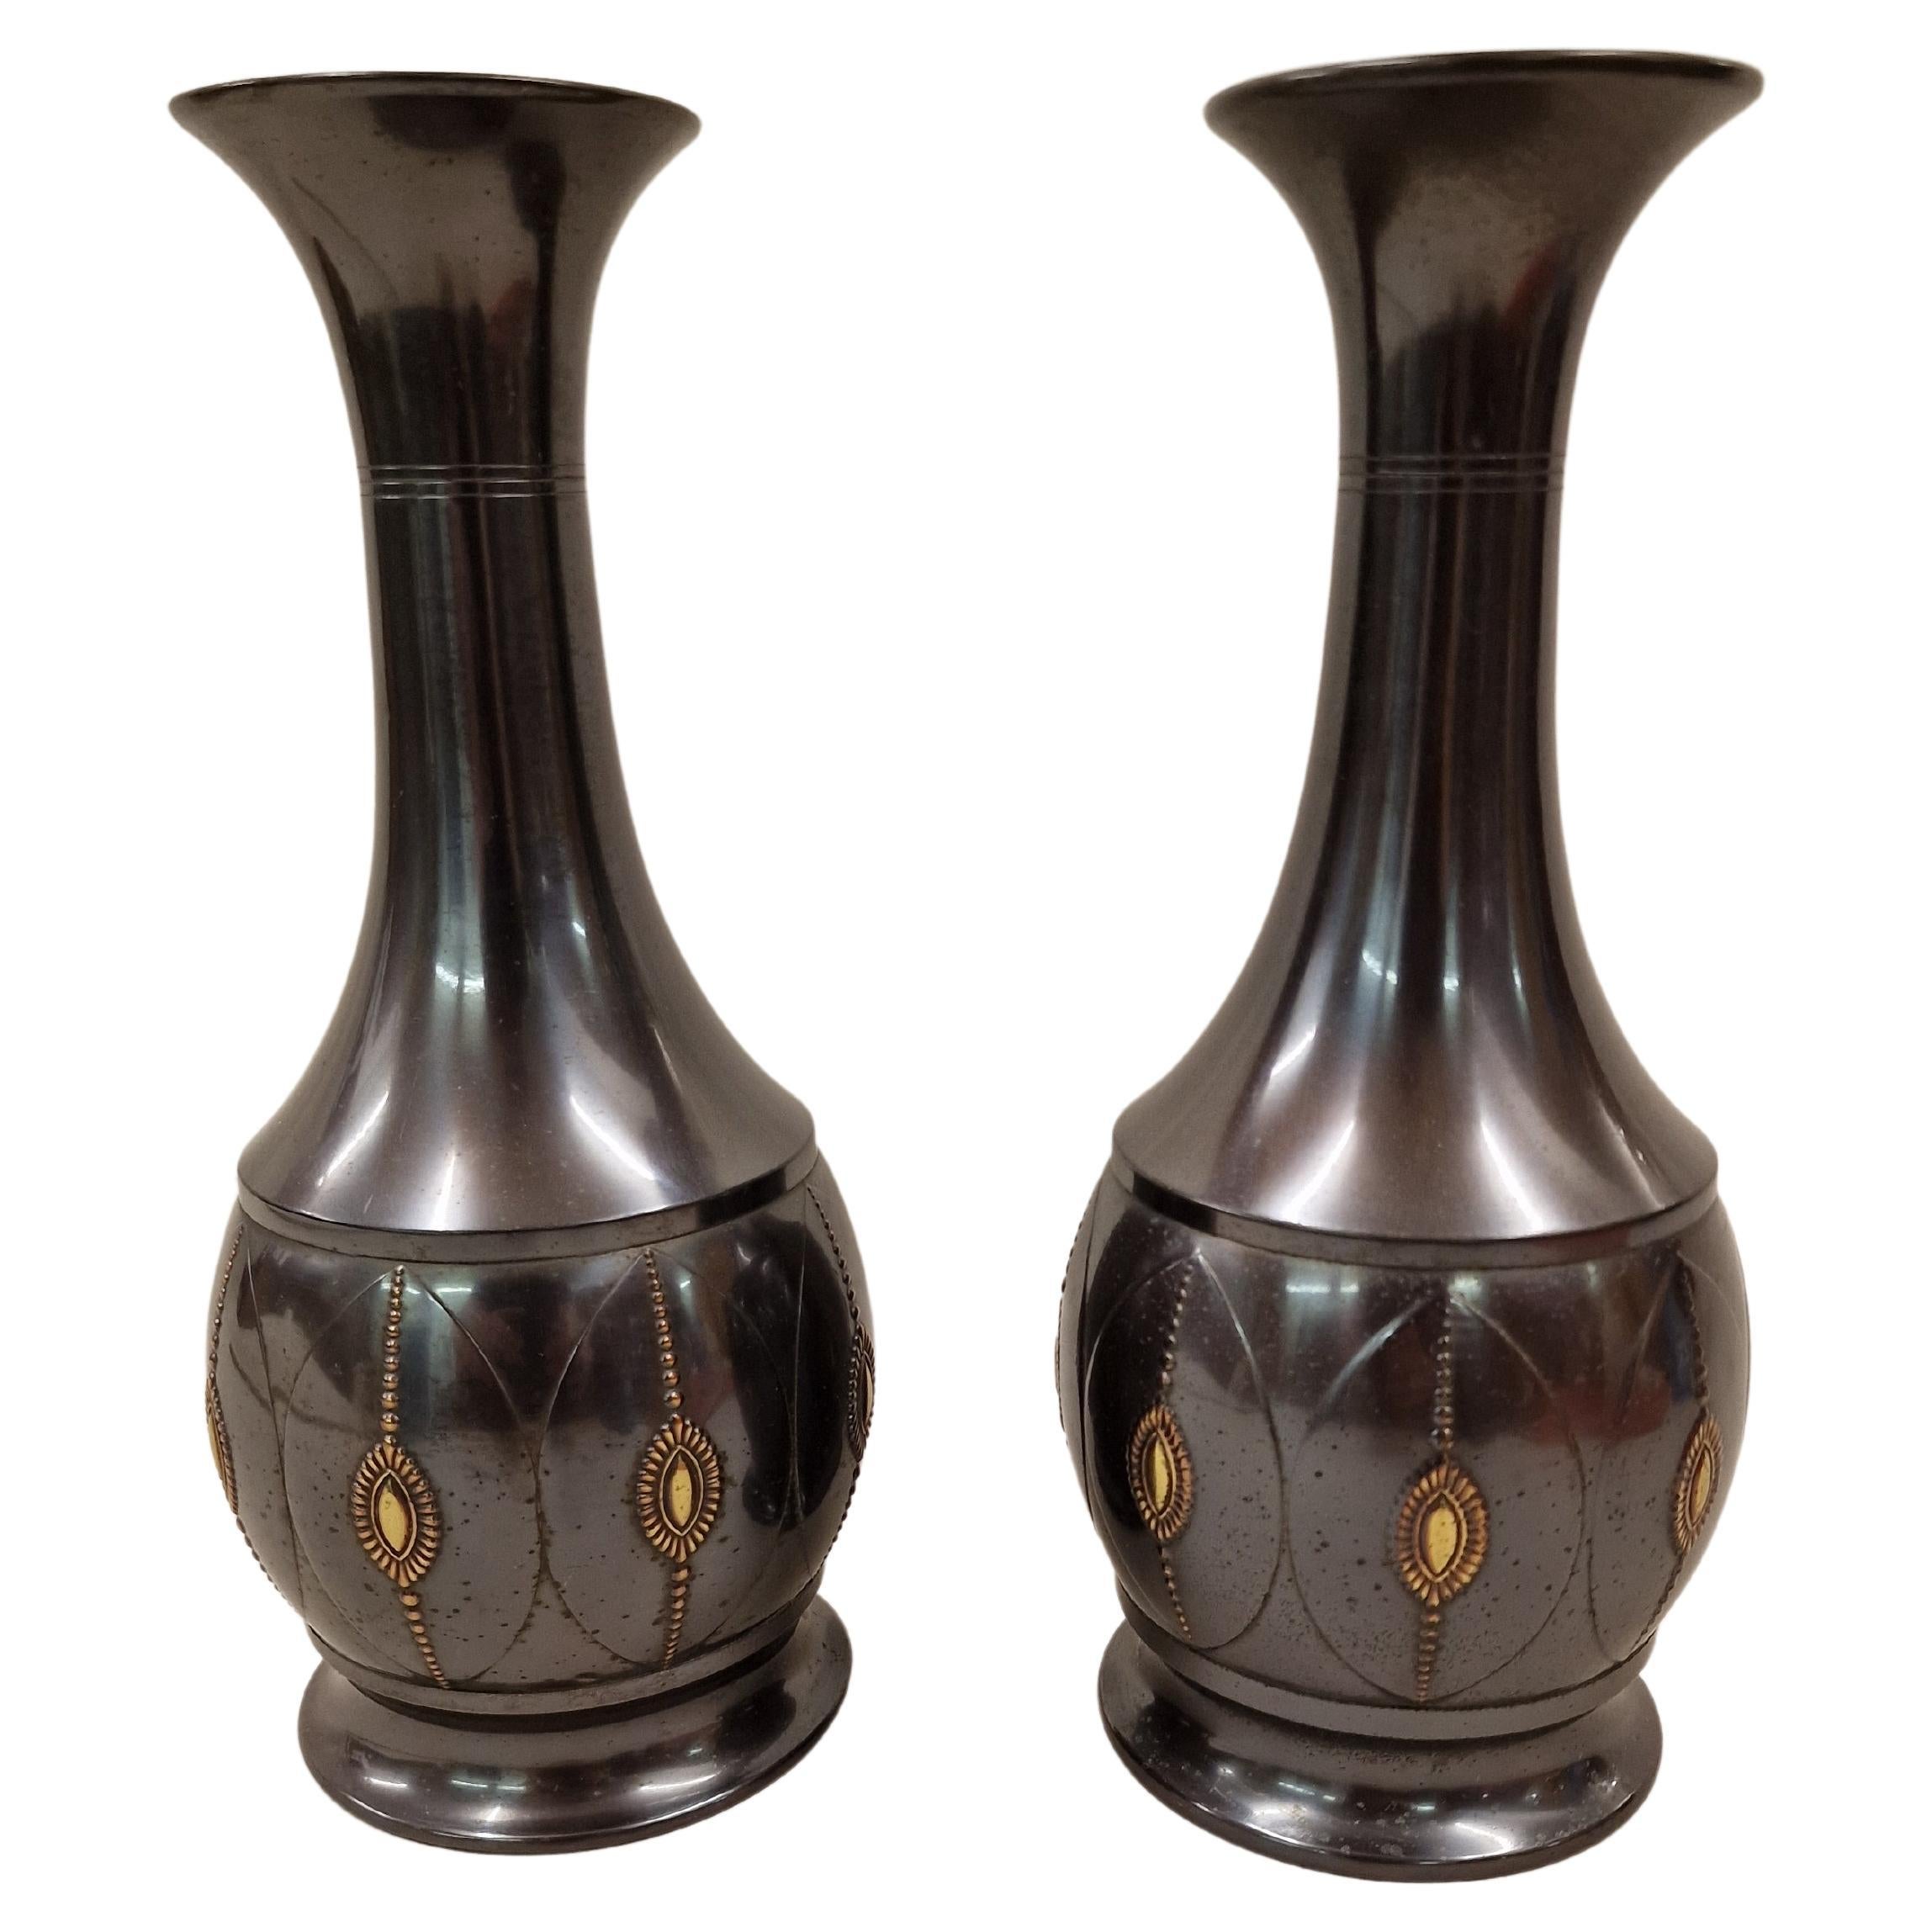 Pair of decorative flower Vases, brass, Art Deco, 1920s, Daalderop Royal Holland